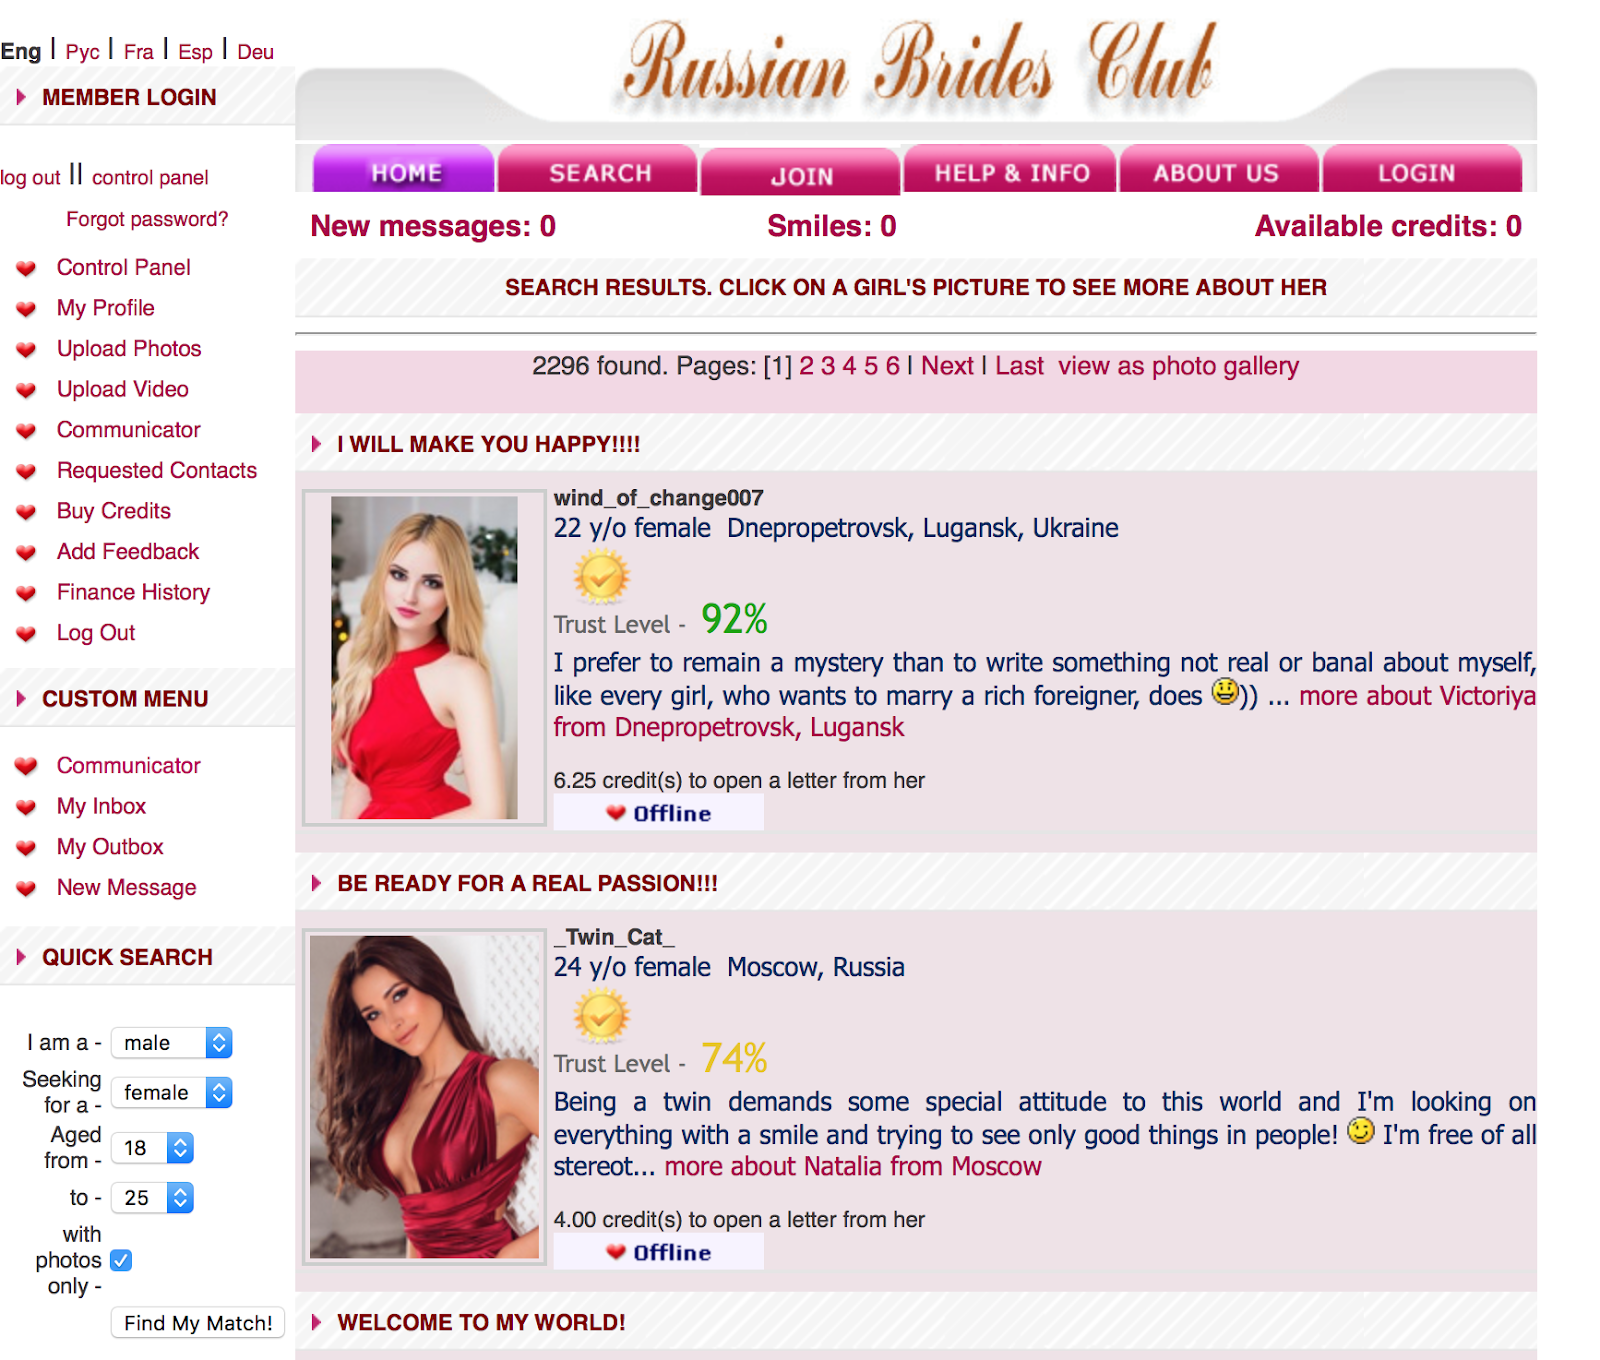 Russian Brides Club Review